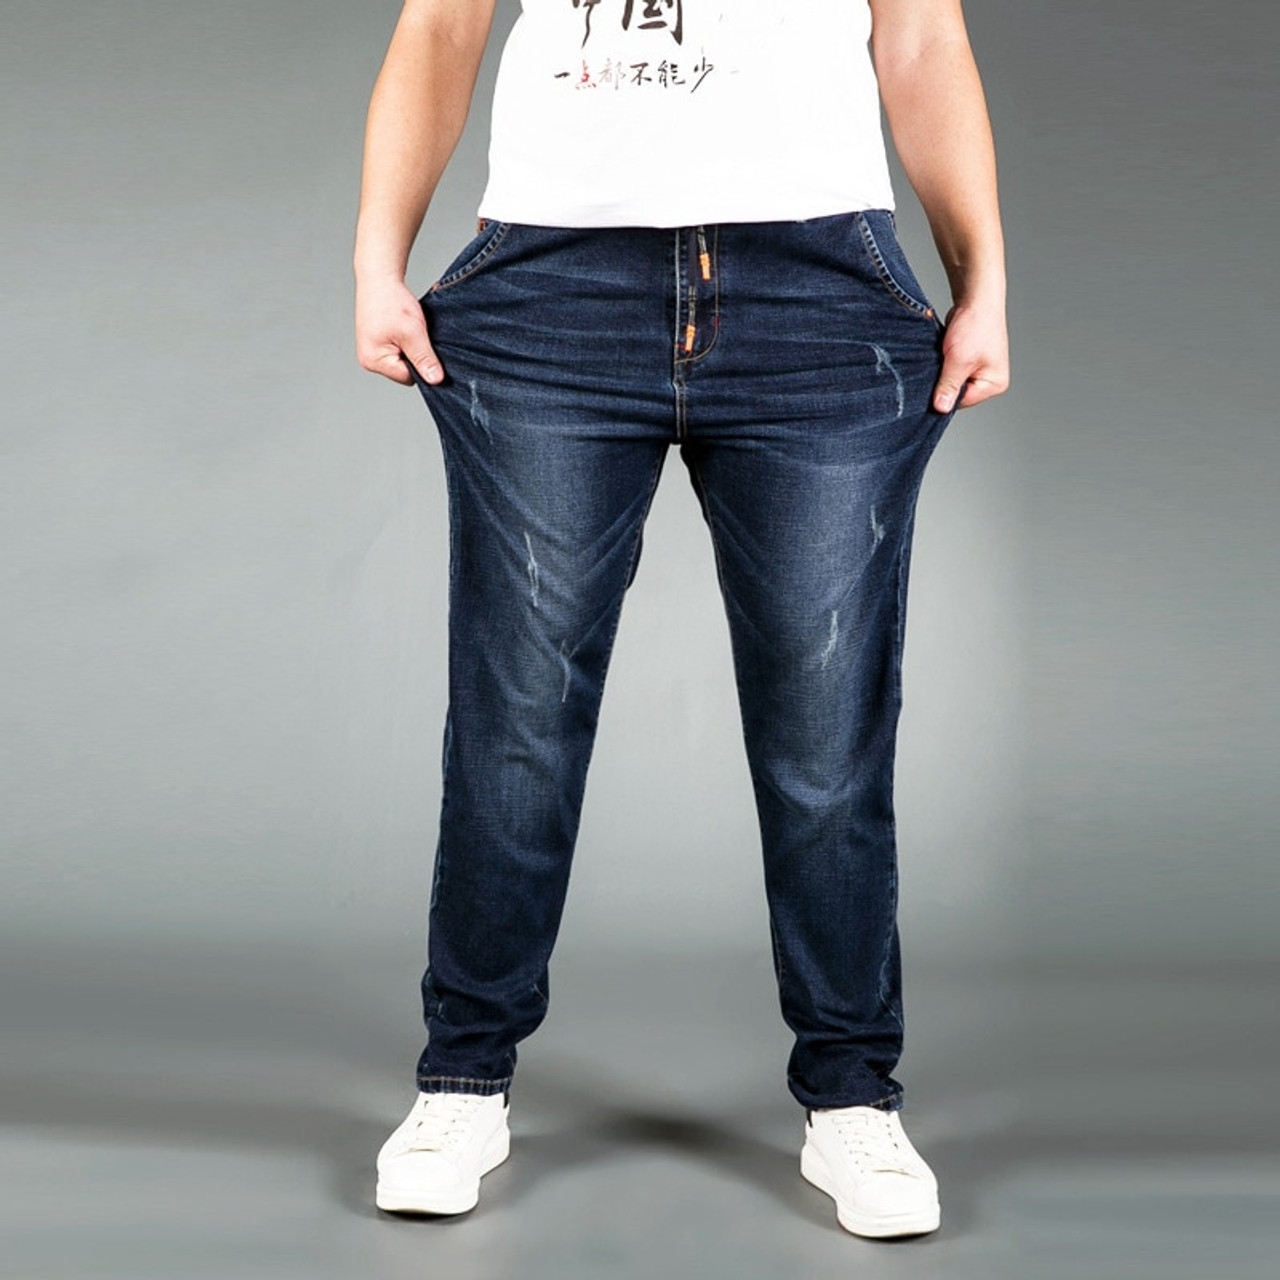 BadyminCSL Mens Pants Clearance Plus Size Men's Fashion Casual Plaid  Printed Trousers High Elasticity Large Size Slim Fitting Pants Trousers  Full Lengrh Pants - Walmart.com